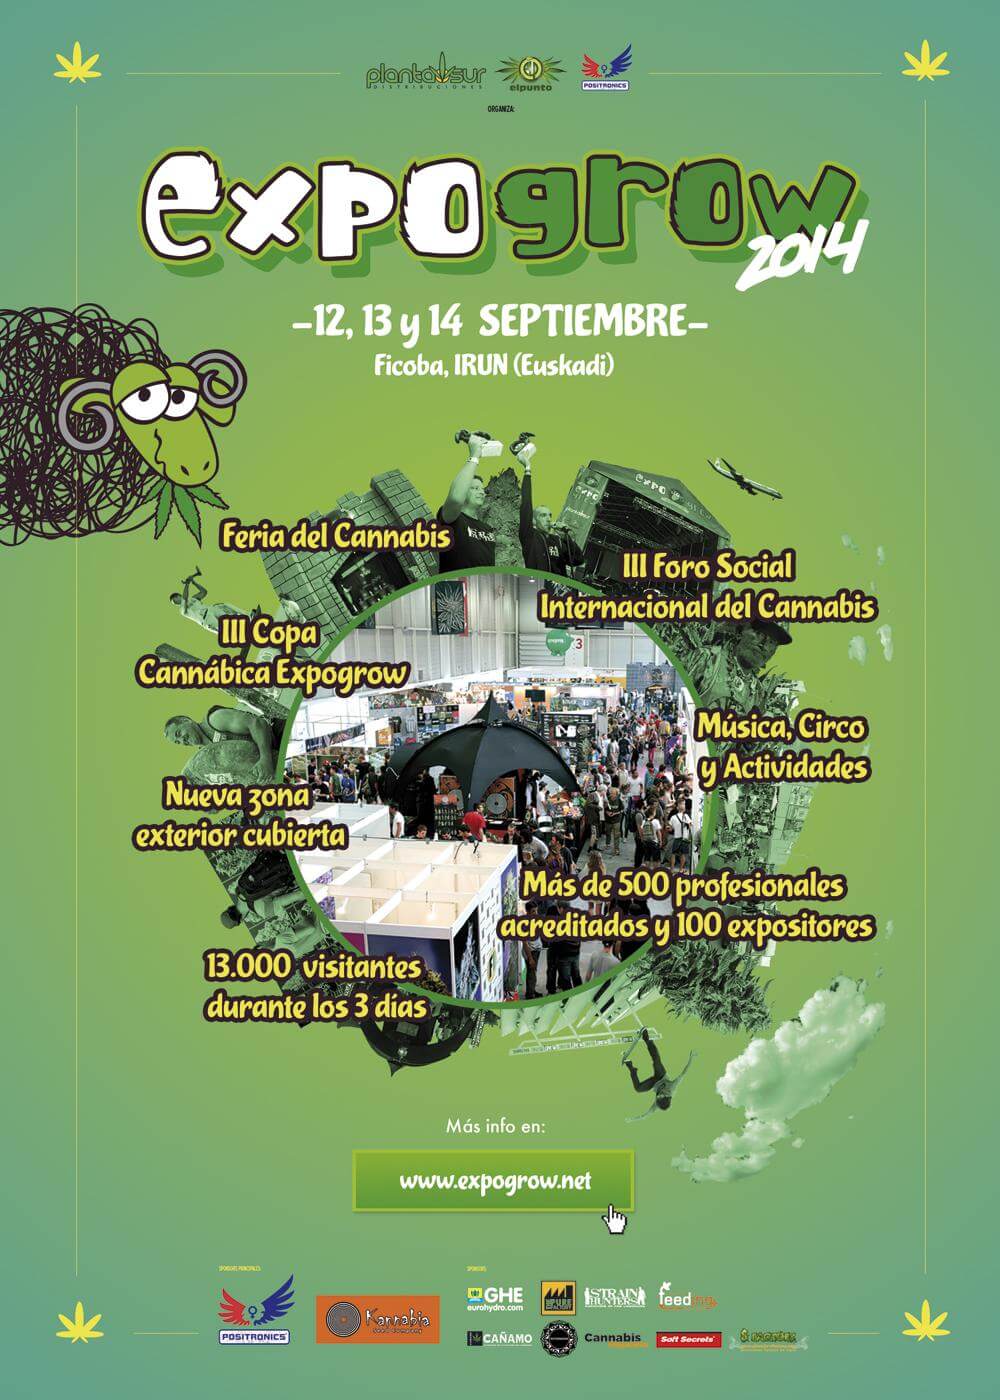 Programme de la feria Expogrow 2014 d'Irun